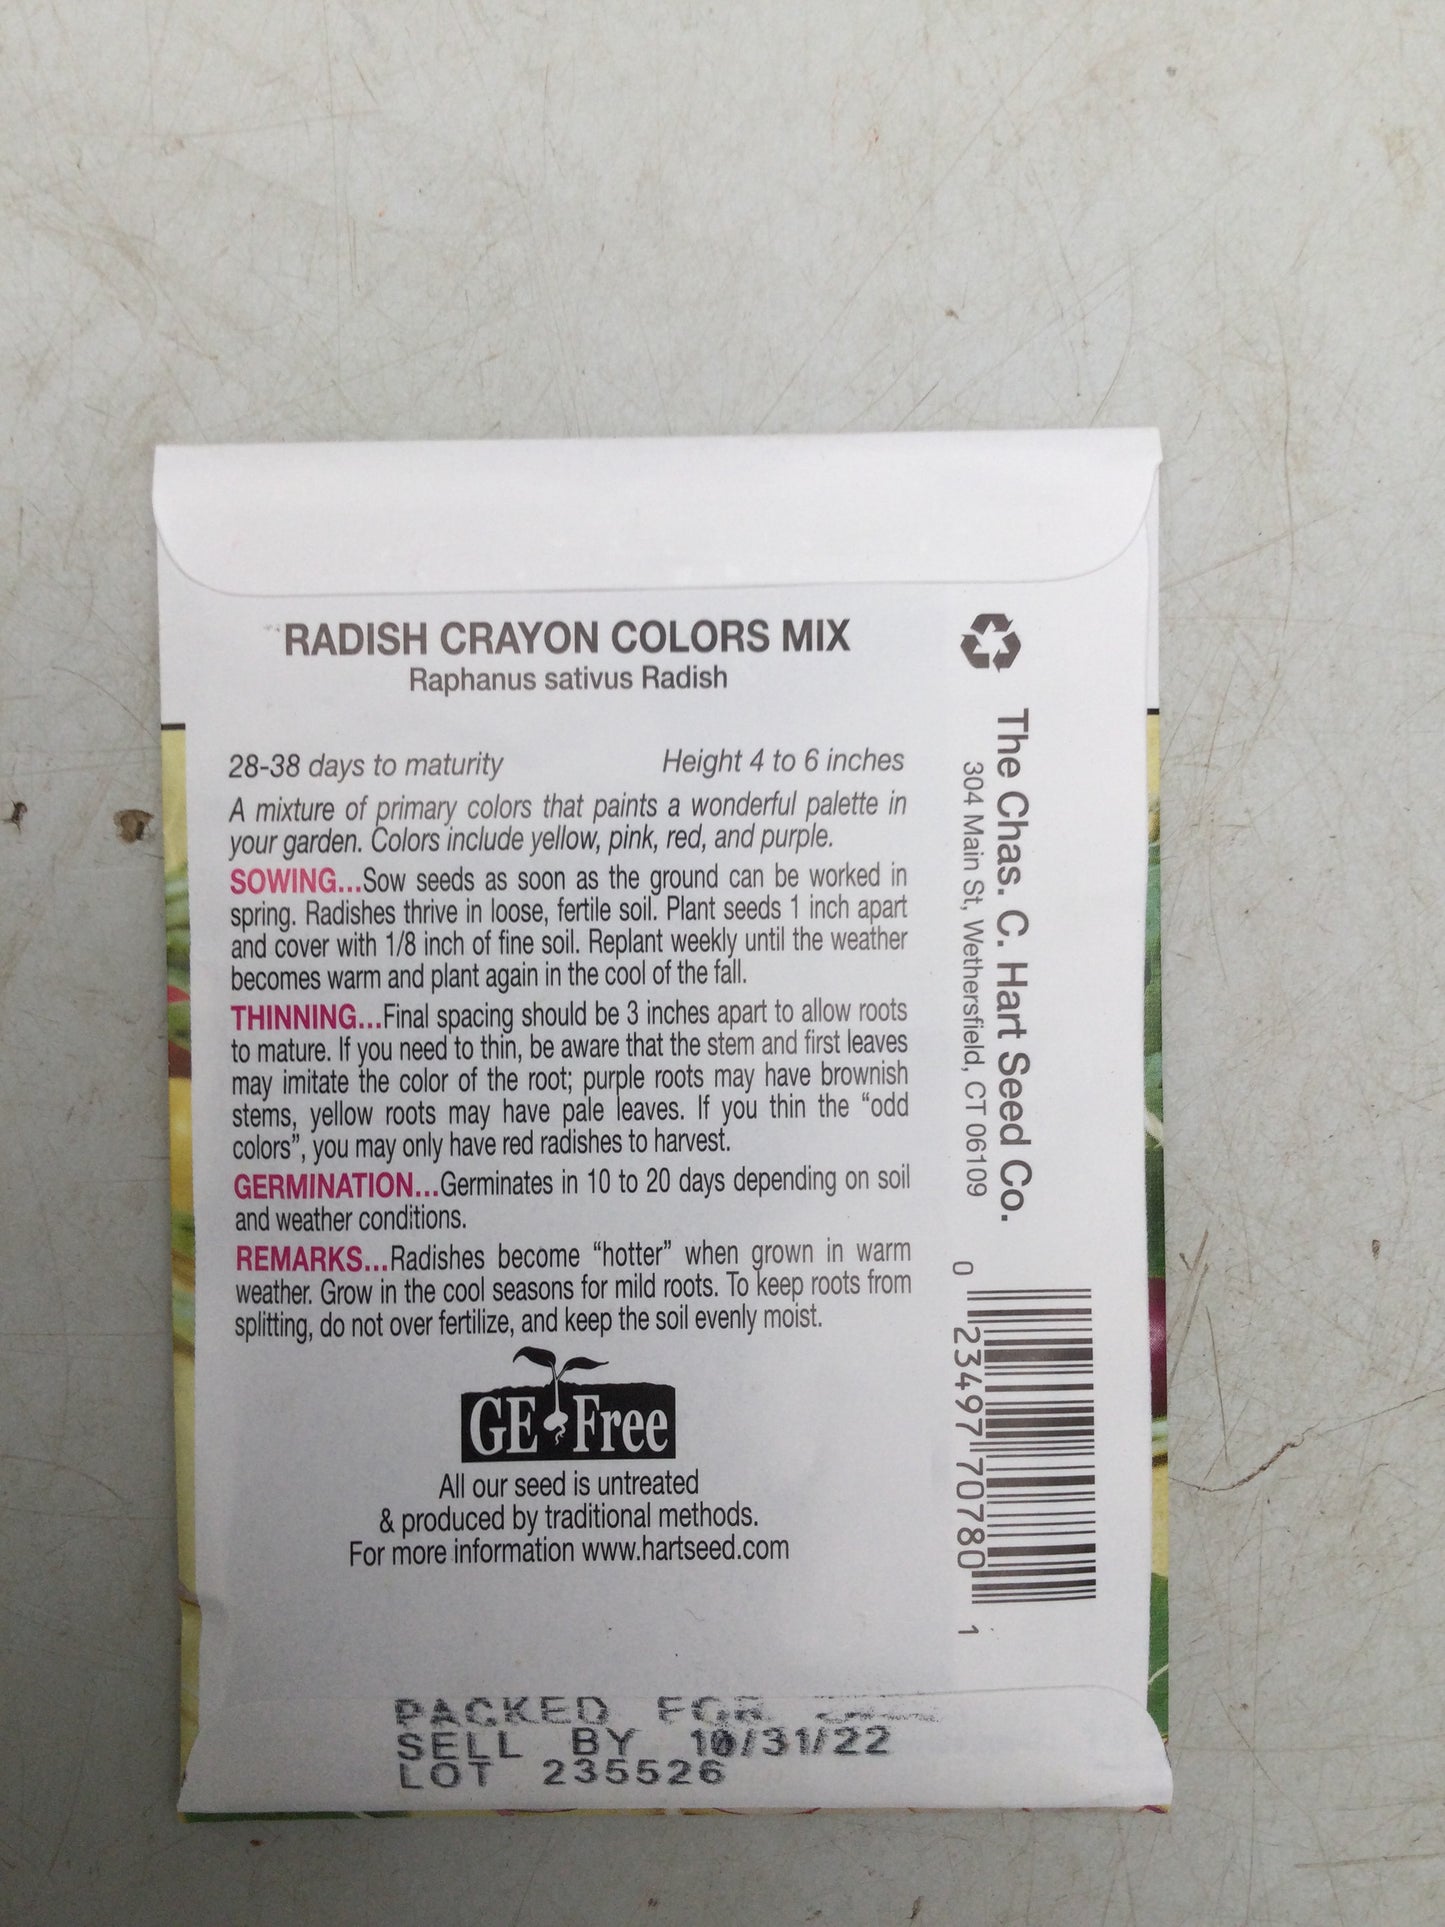 Radish Crayon colors mix